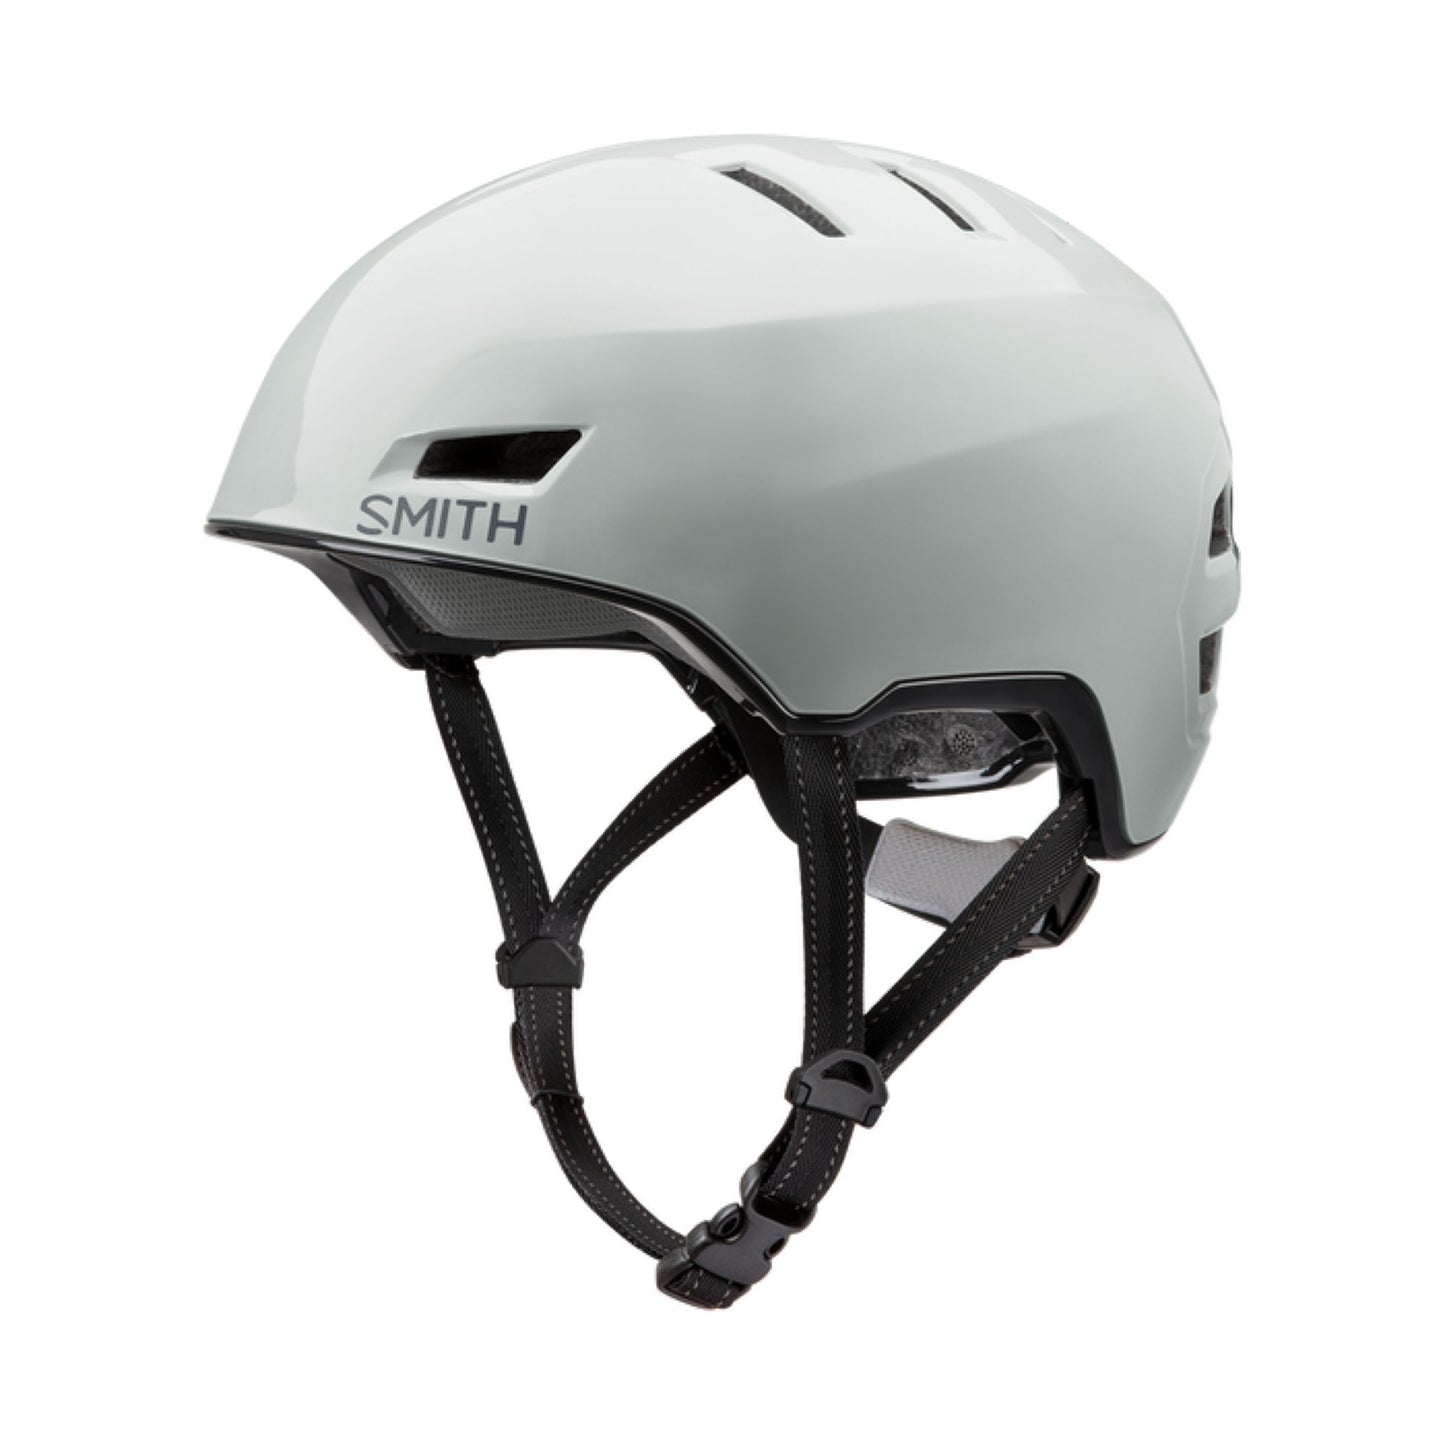 Smith Express Helmet Cloudgrey Bike Helmets